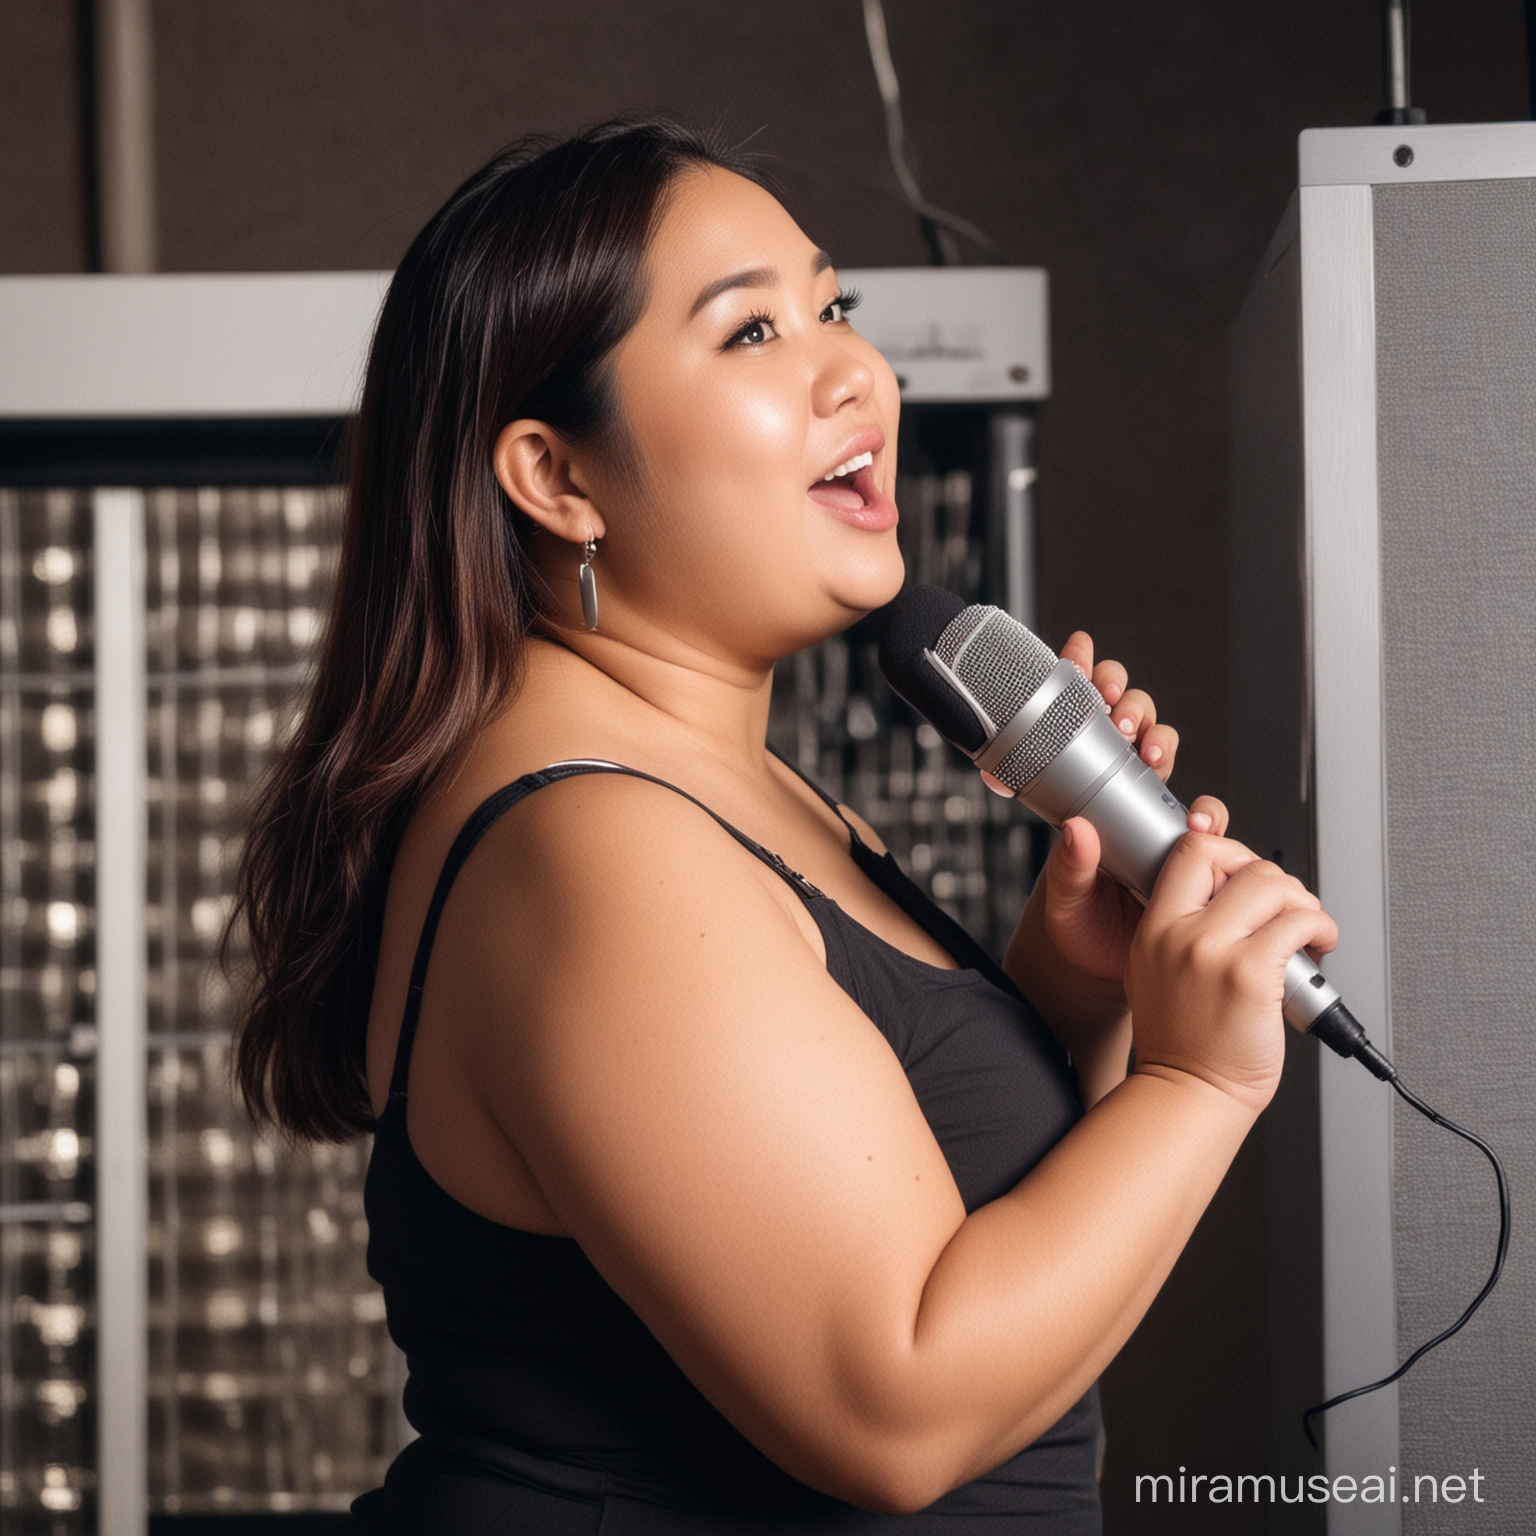 Filipina Woman Singing Karaoke with Microphone at Videoke Machine